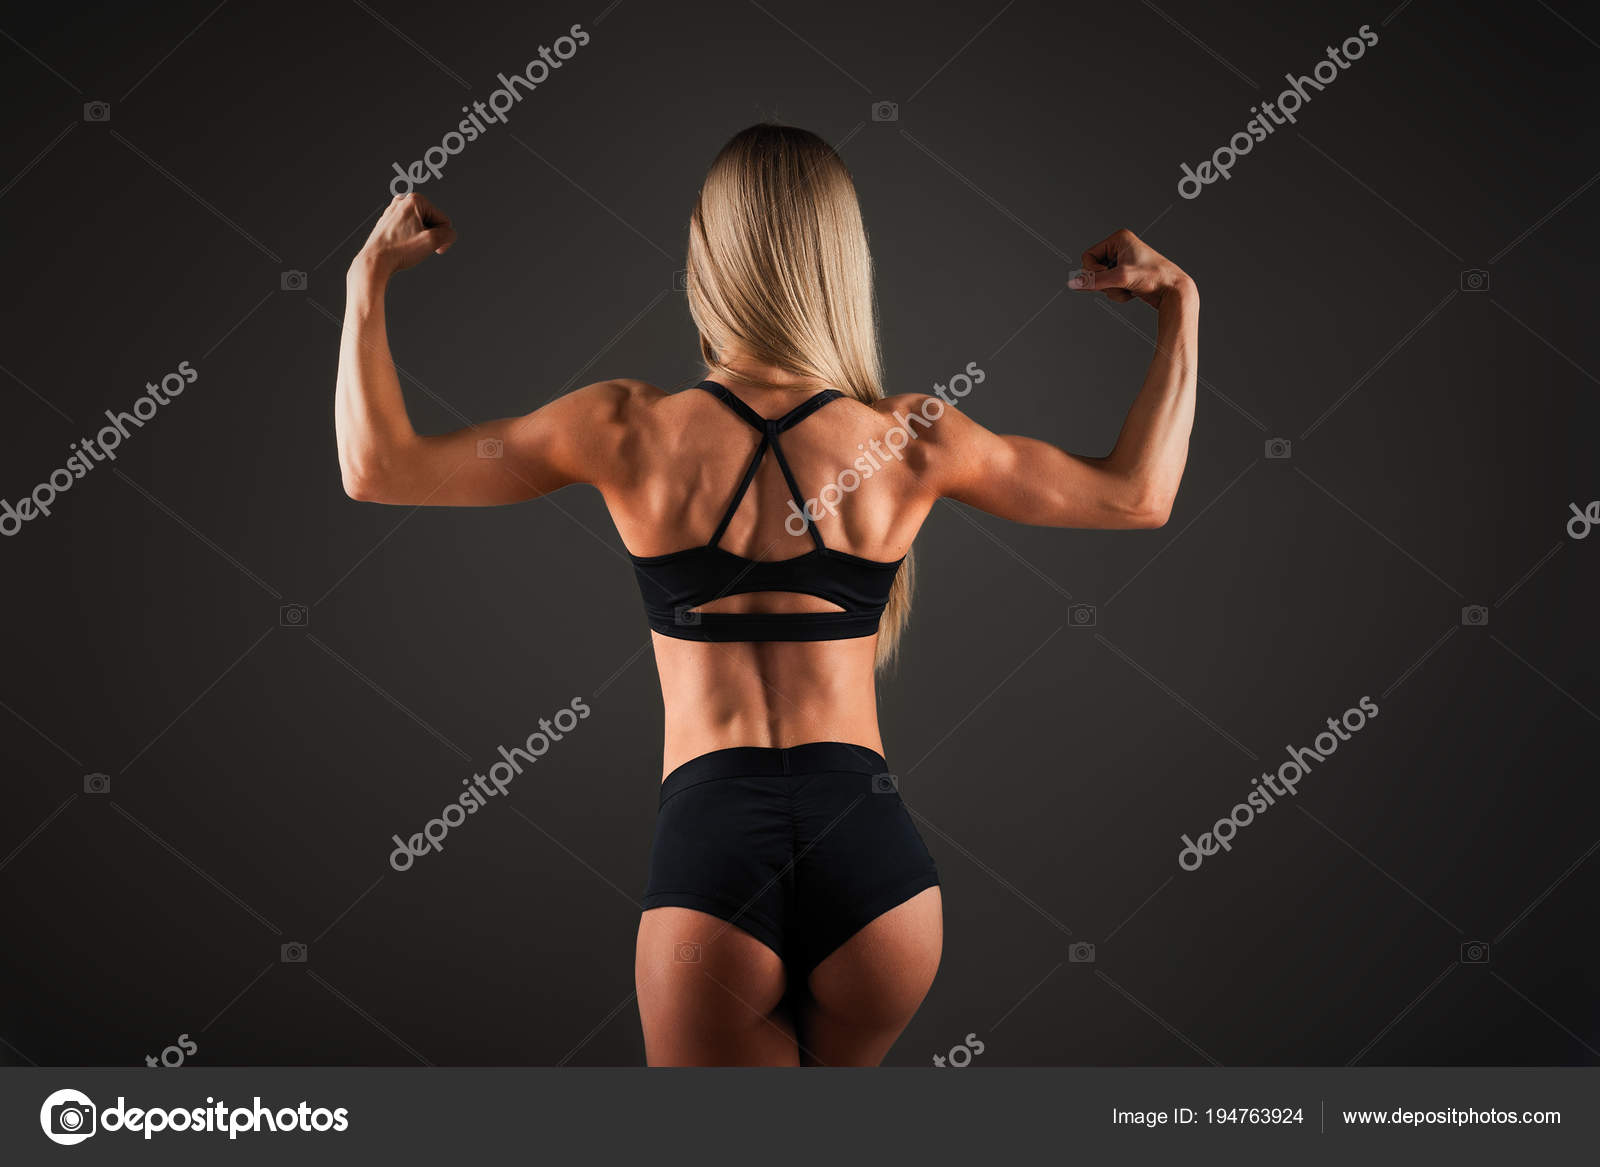 https://st3.depositphotos.com/2365037/19476/i/1600/depositphotos_194763924-stock-photo-strong-athletic-woman-fitness-model.jpg